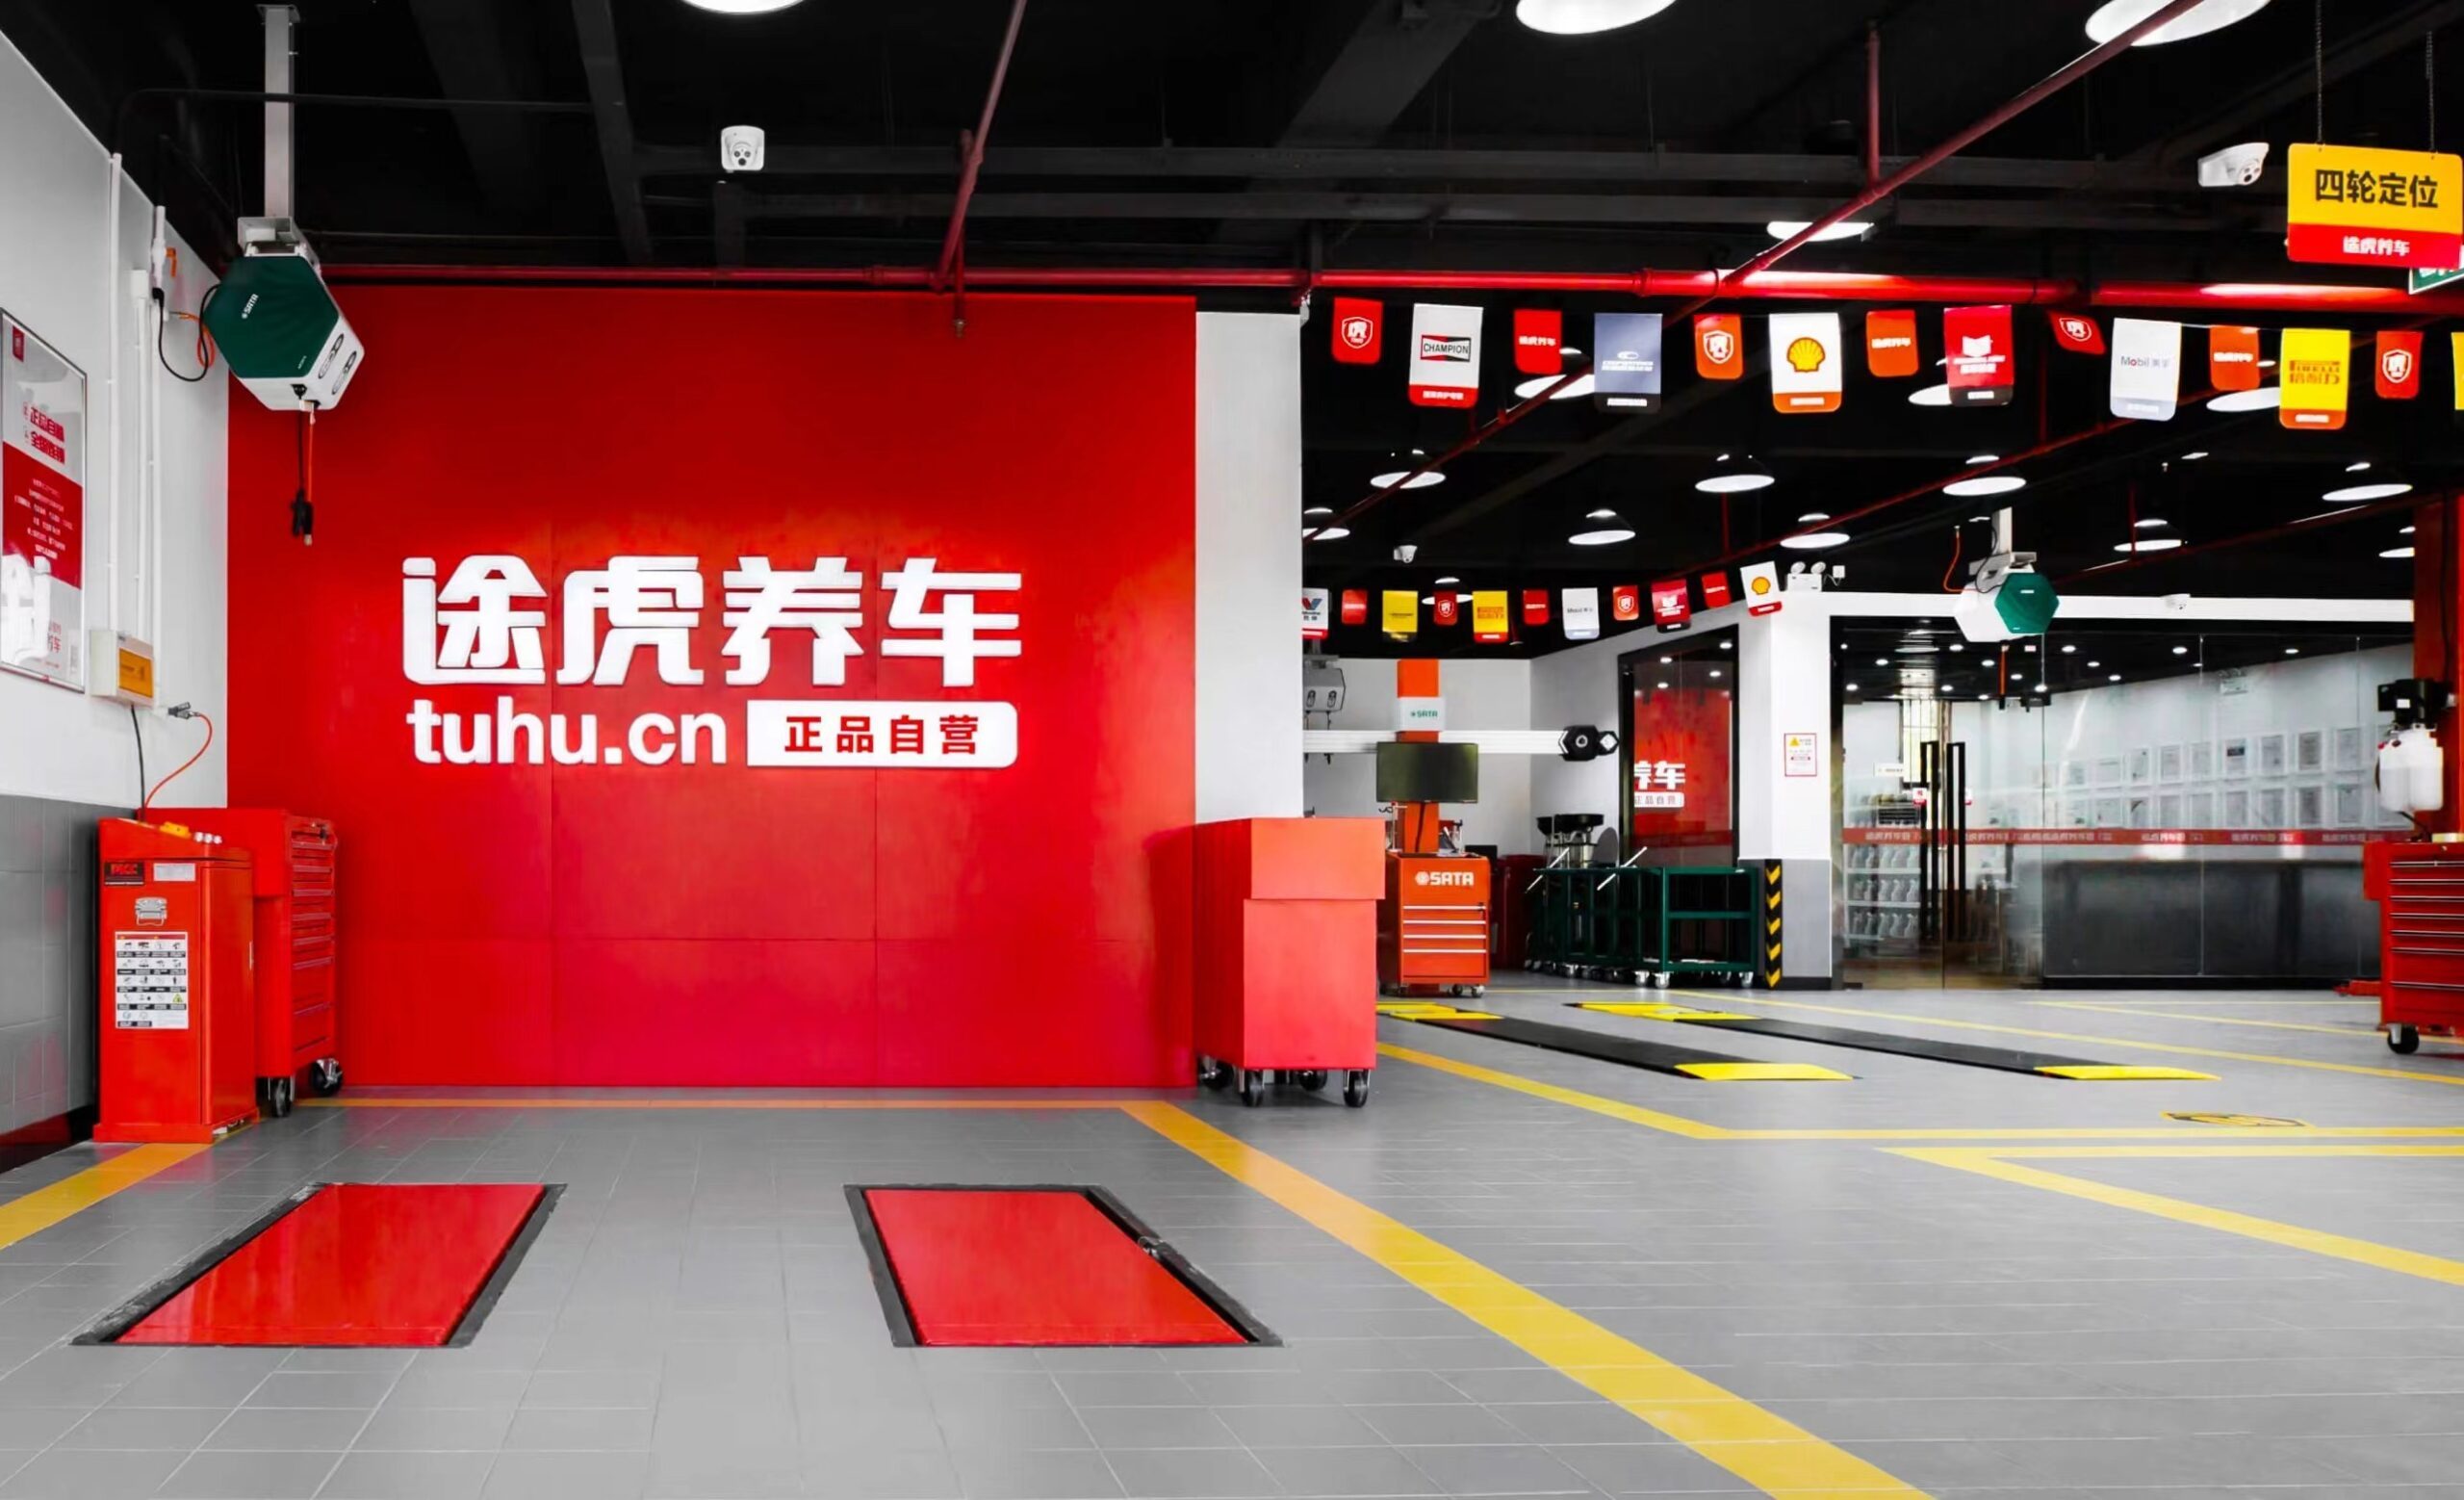 Chinese car maintenance service startup Tuhu to raise $150m in Hong Kong IPO